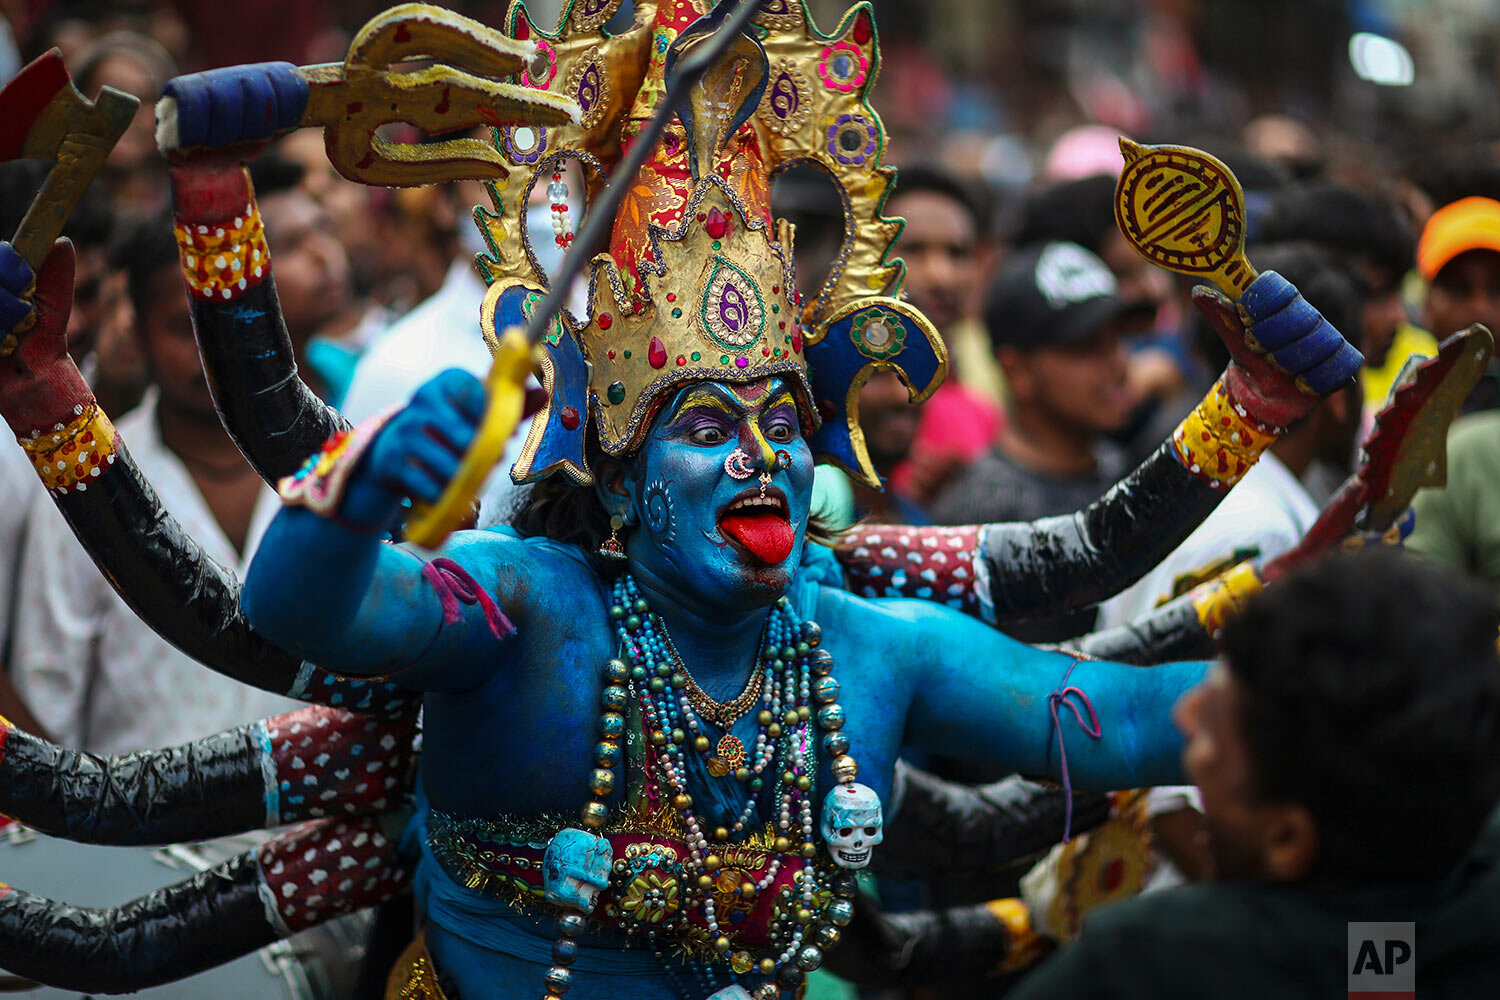  A devotee dressed like Kali dances during the Bonalu festival in Hyderabad, India, Sunday, Aug. 1, 2021.  (AP Photo/Mahesh Kumar A.) 